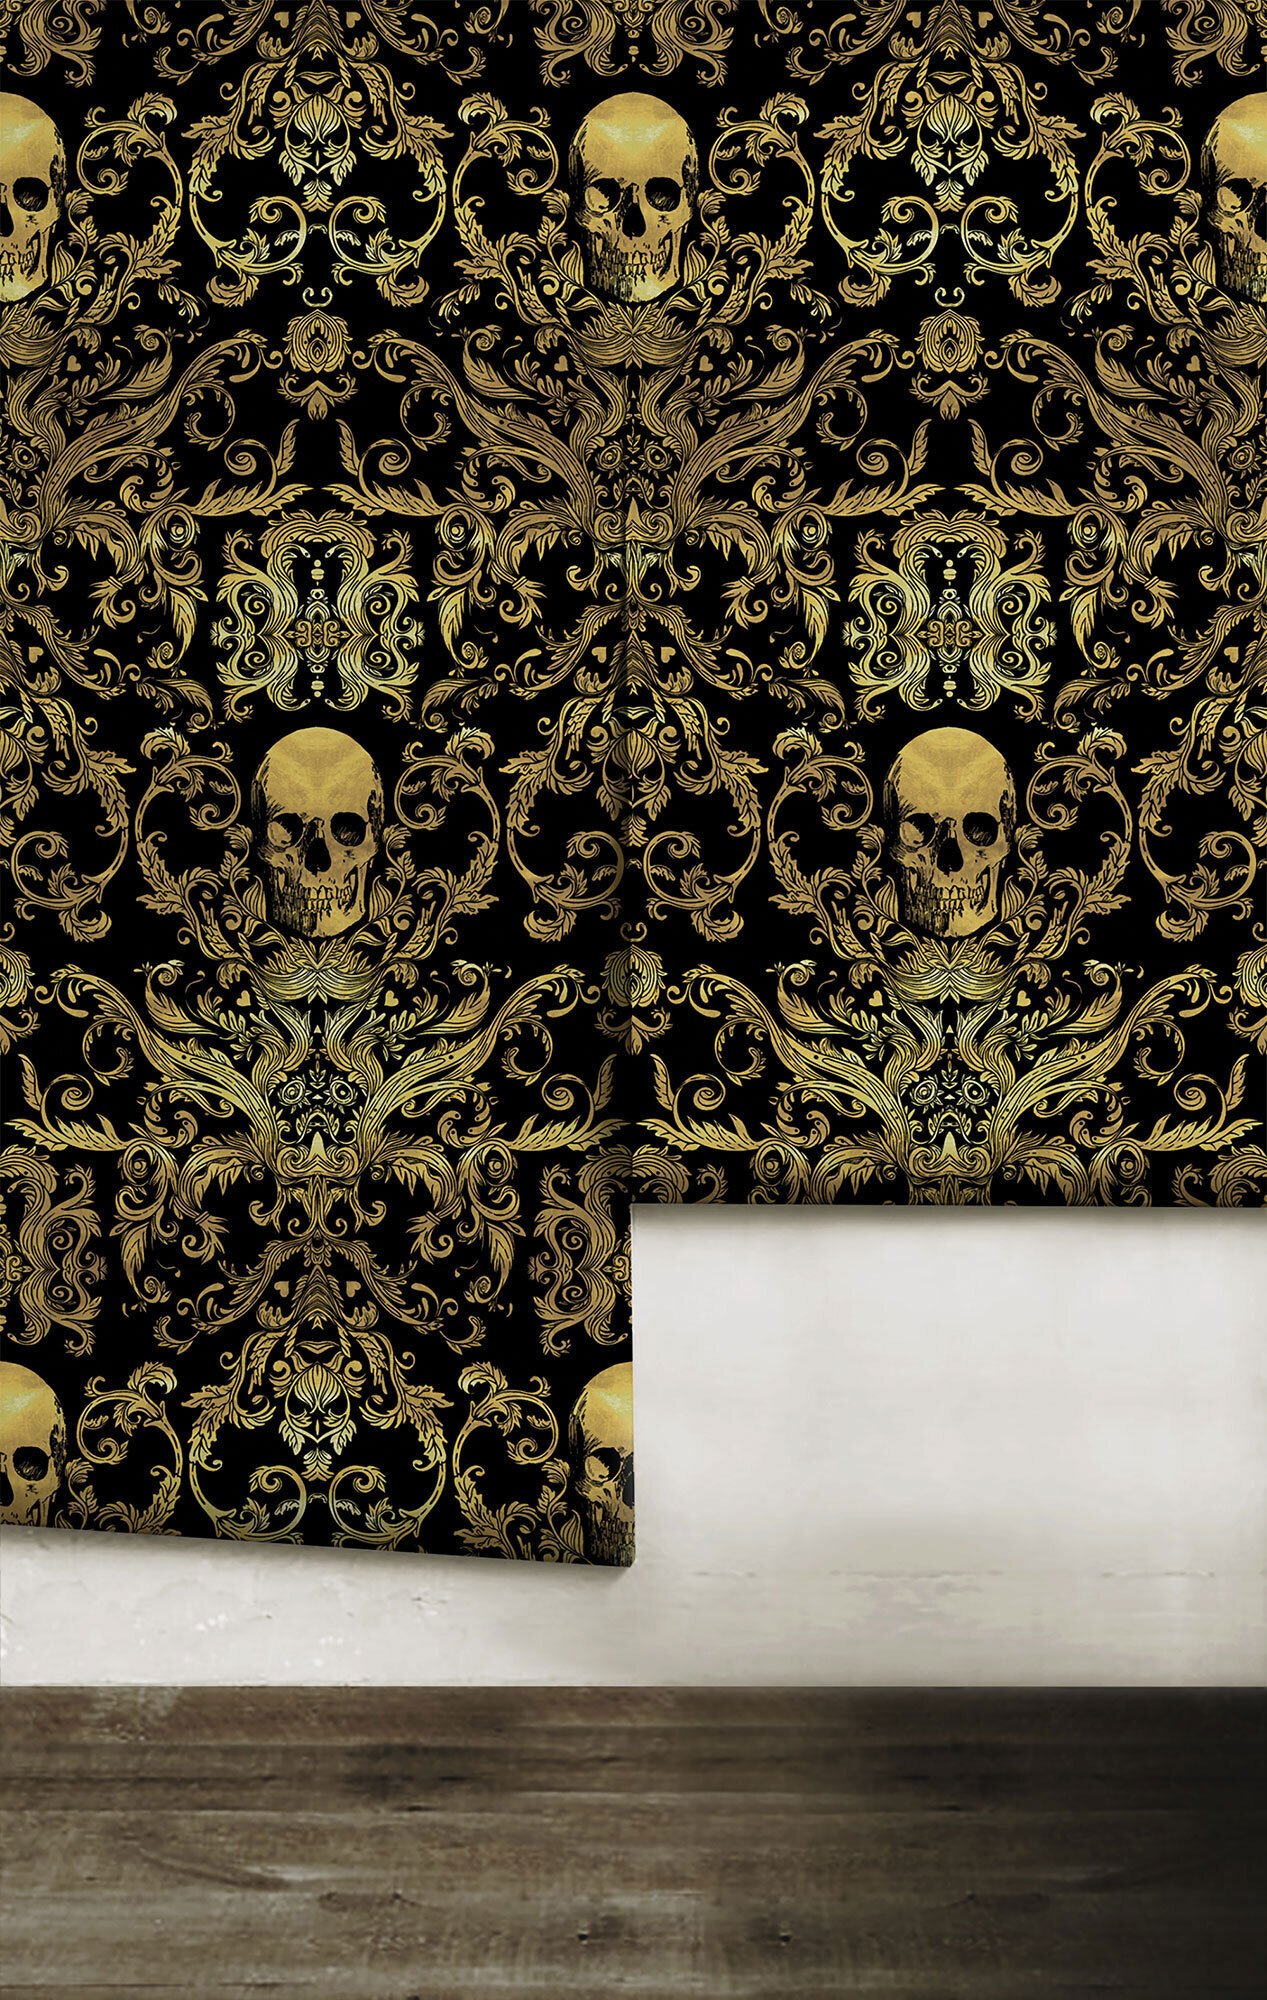 Free download 1080x2160 Crown on skull golden crown head wallpaper Skull  736x1472 for your Desktop Mobile  Tablet  Explore 13 Skull Heads  Wallpapers  Skull Wallpaper Skull Background Skull Backgrounds